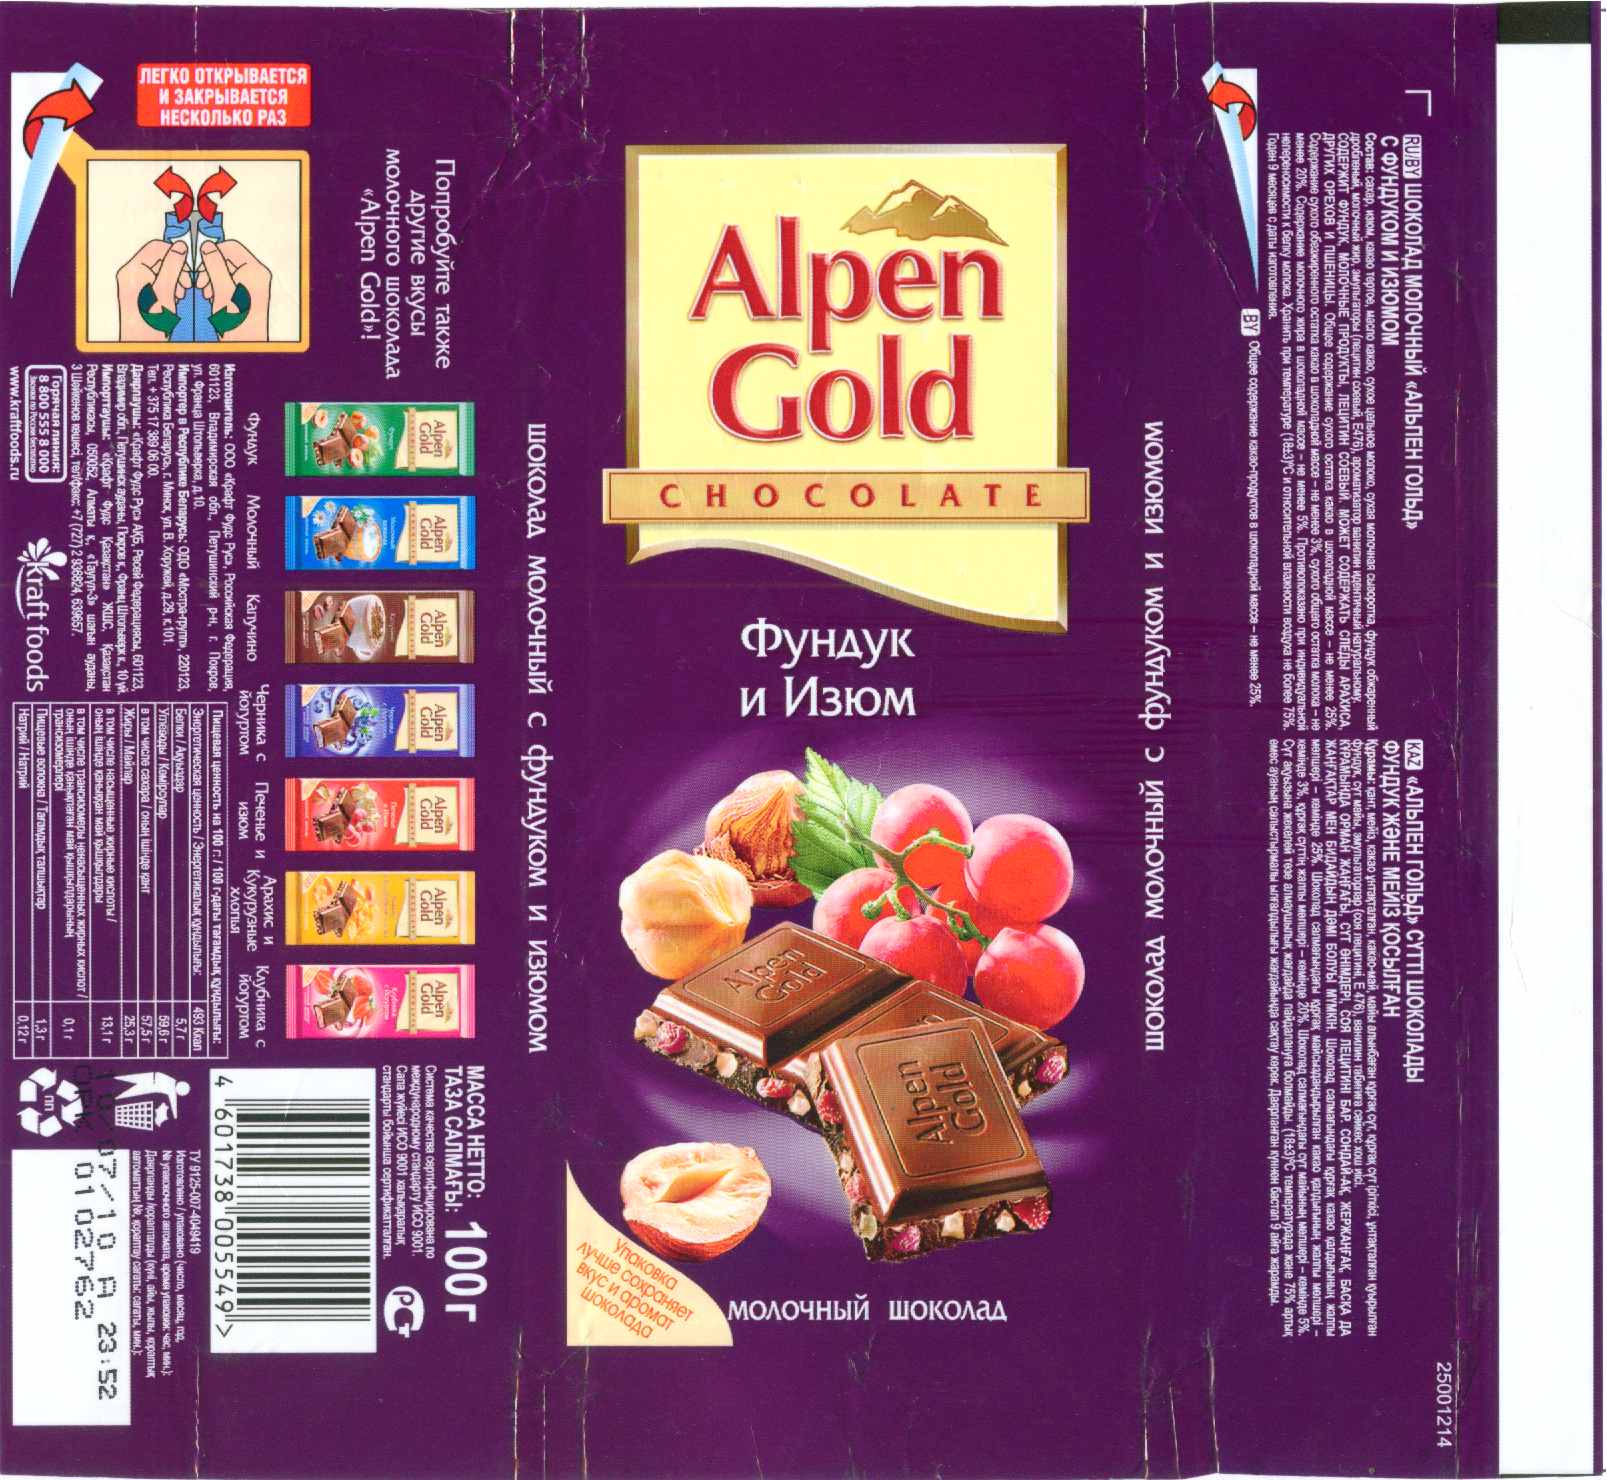 Этикетки шоколадок Альпен Голд